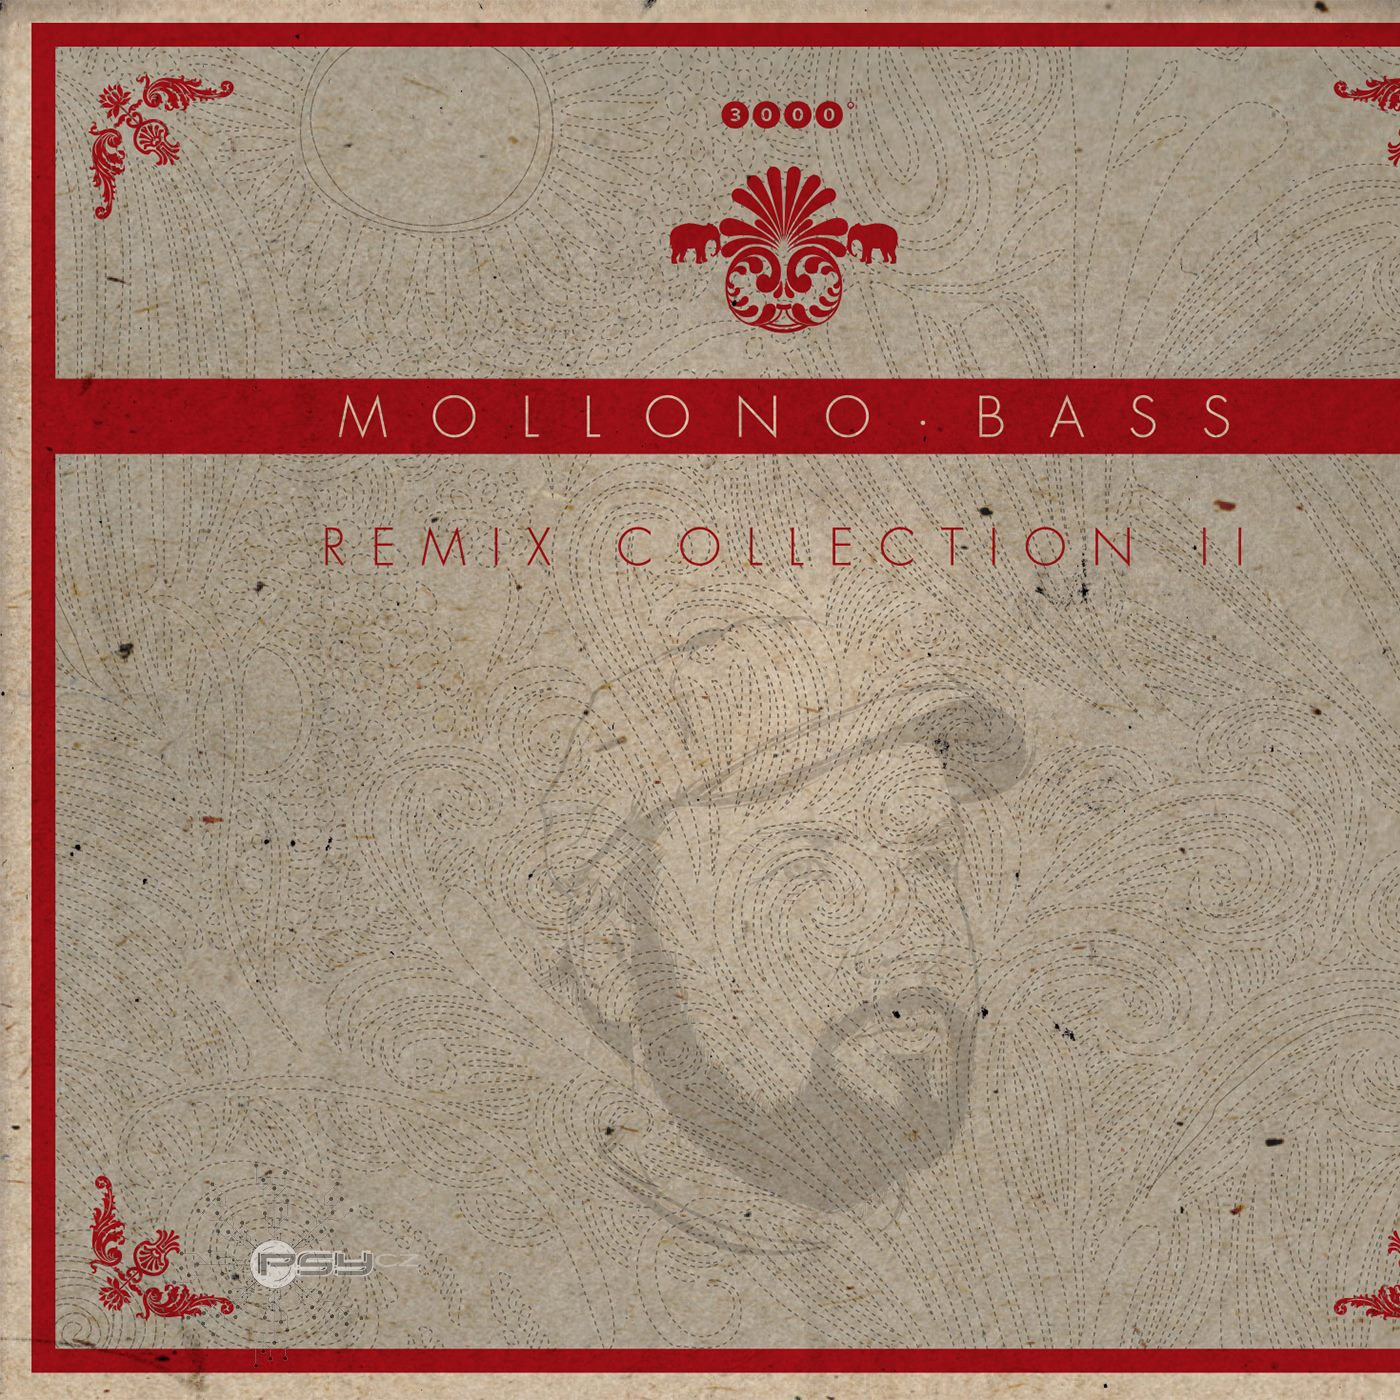 Mollono.Bass - Remix Collection II